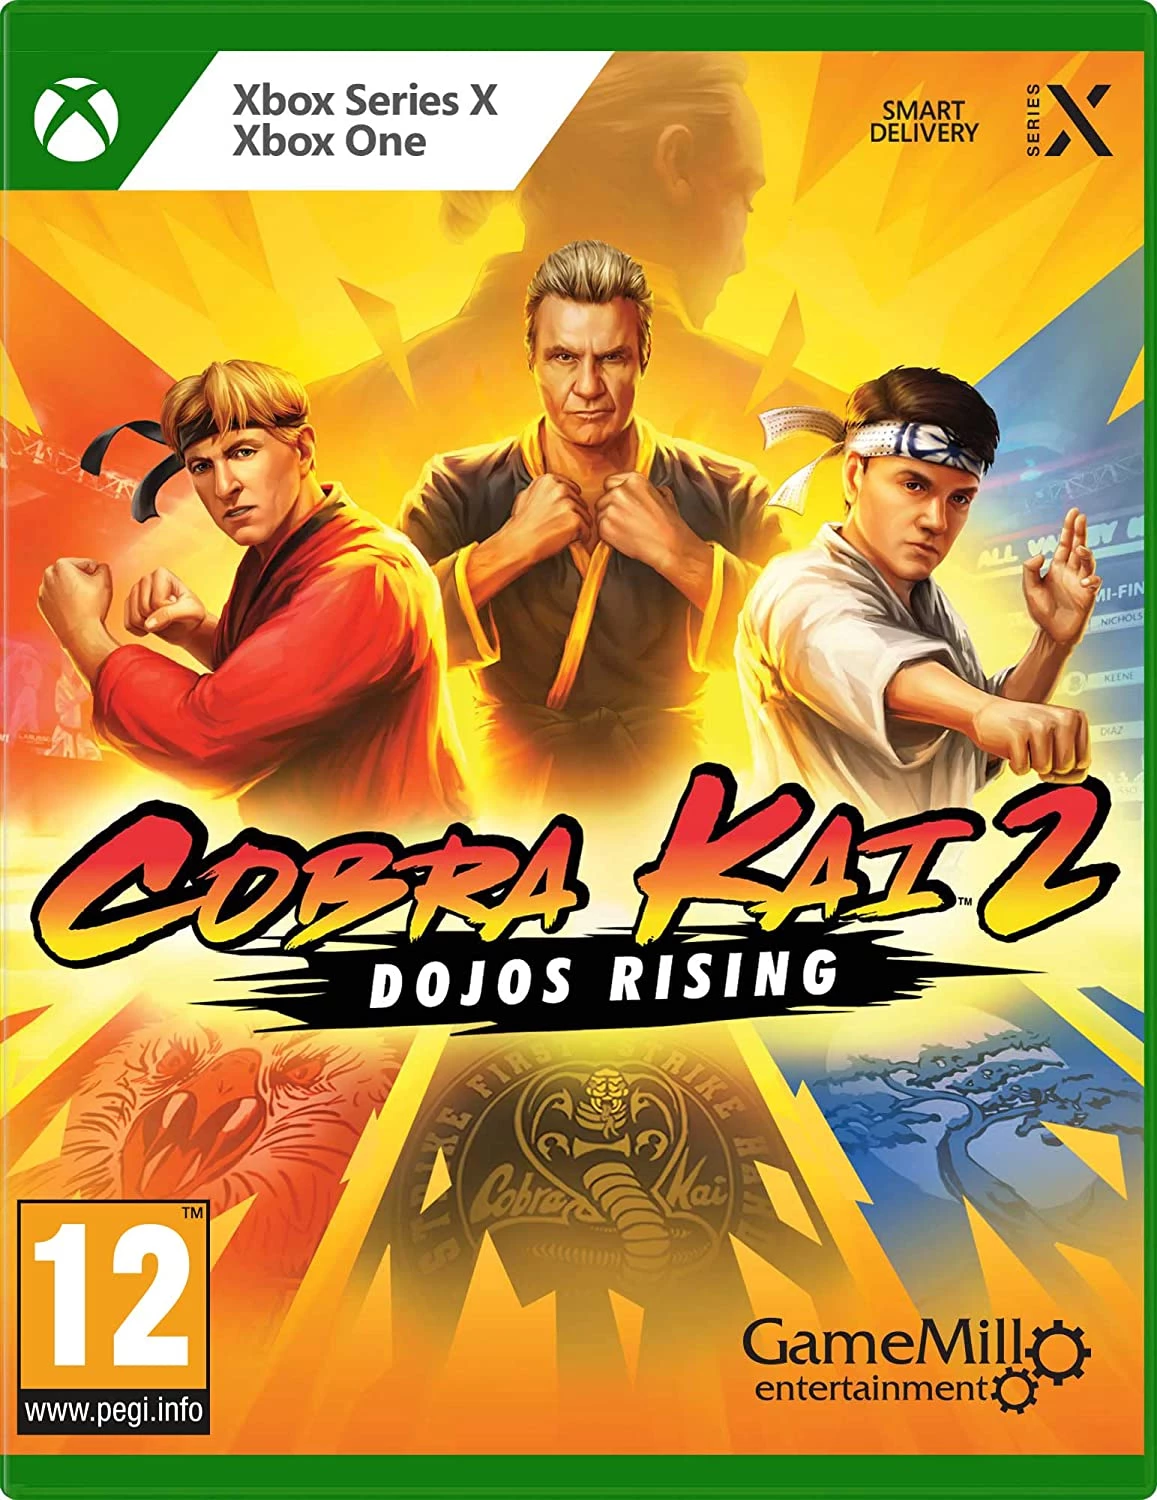 Cobra Kai 2: Dojos Rising (Xbox Series X), GameMill Entertainment